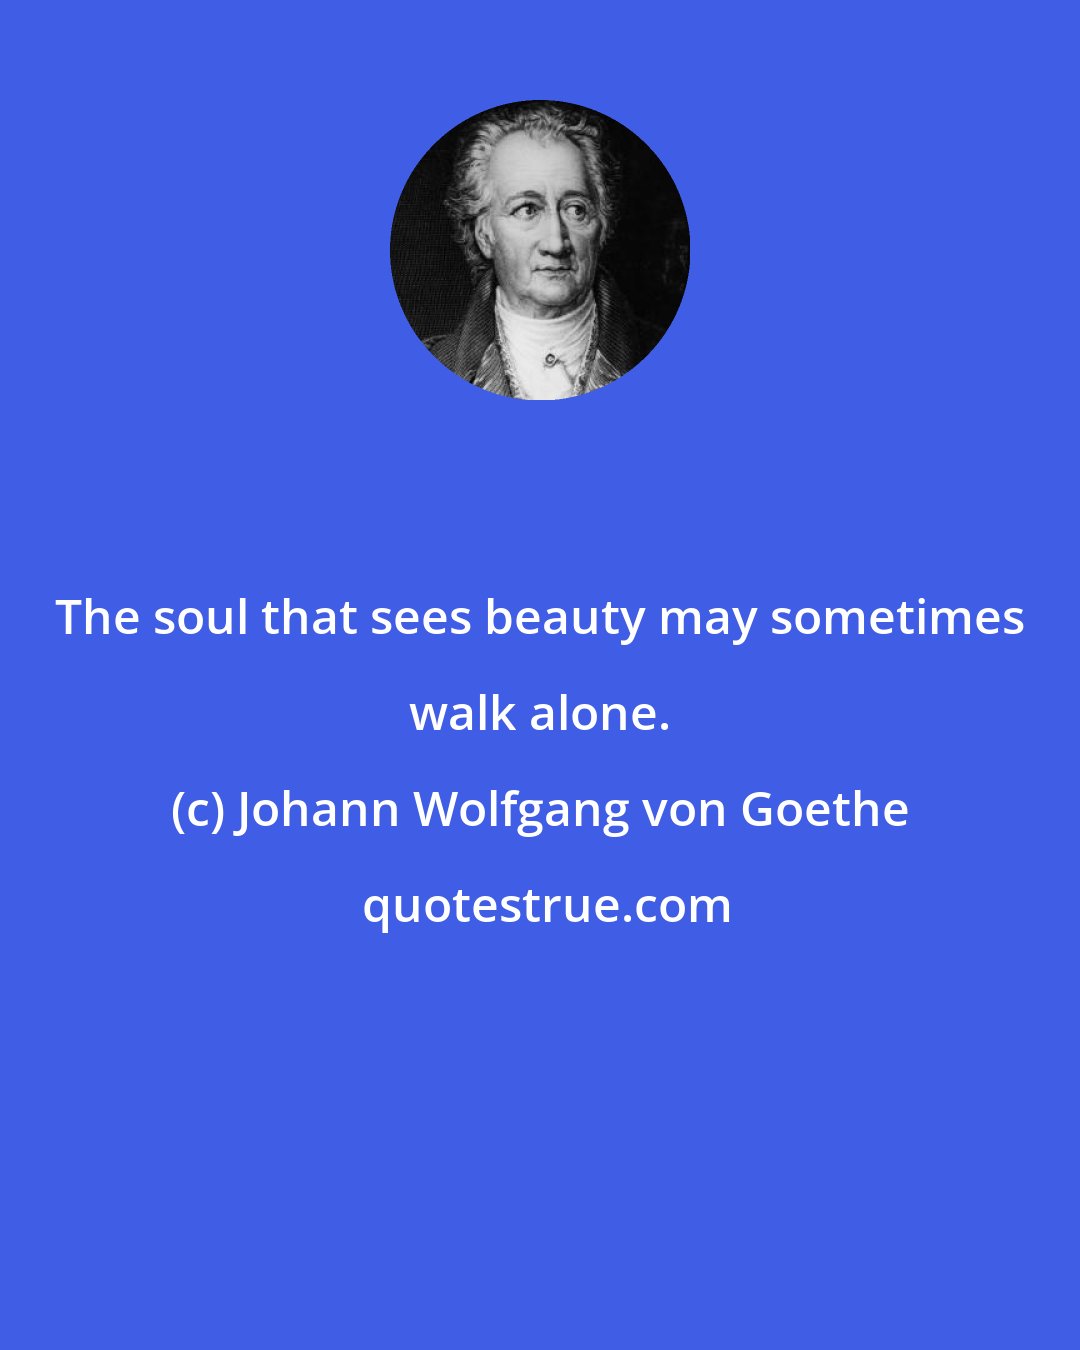 Johann Wolfgang von Goethe: The soul that sees beauty may sometimes walk alone.